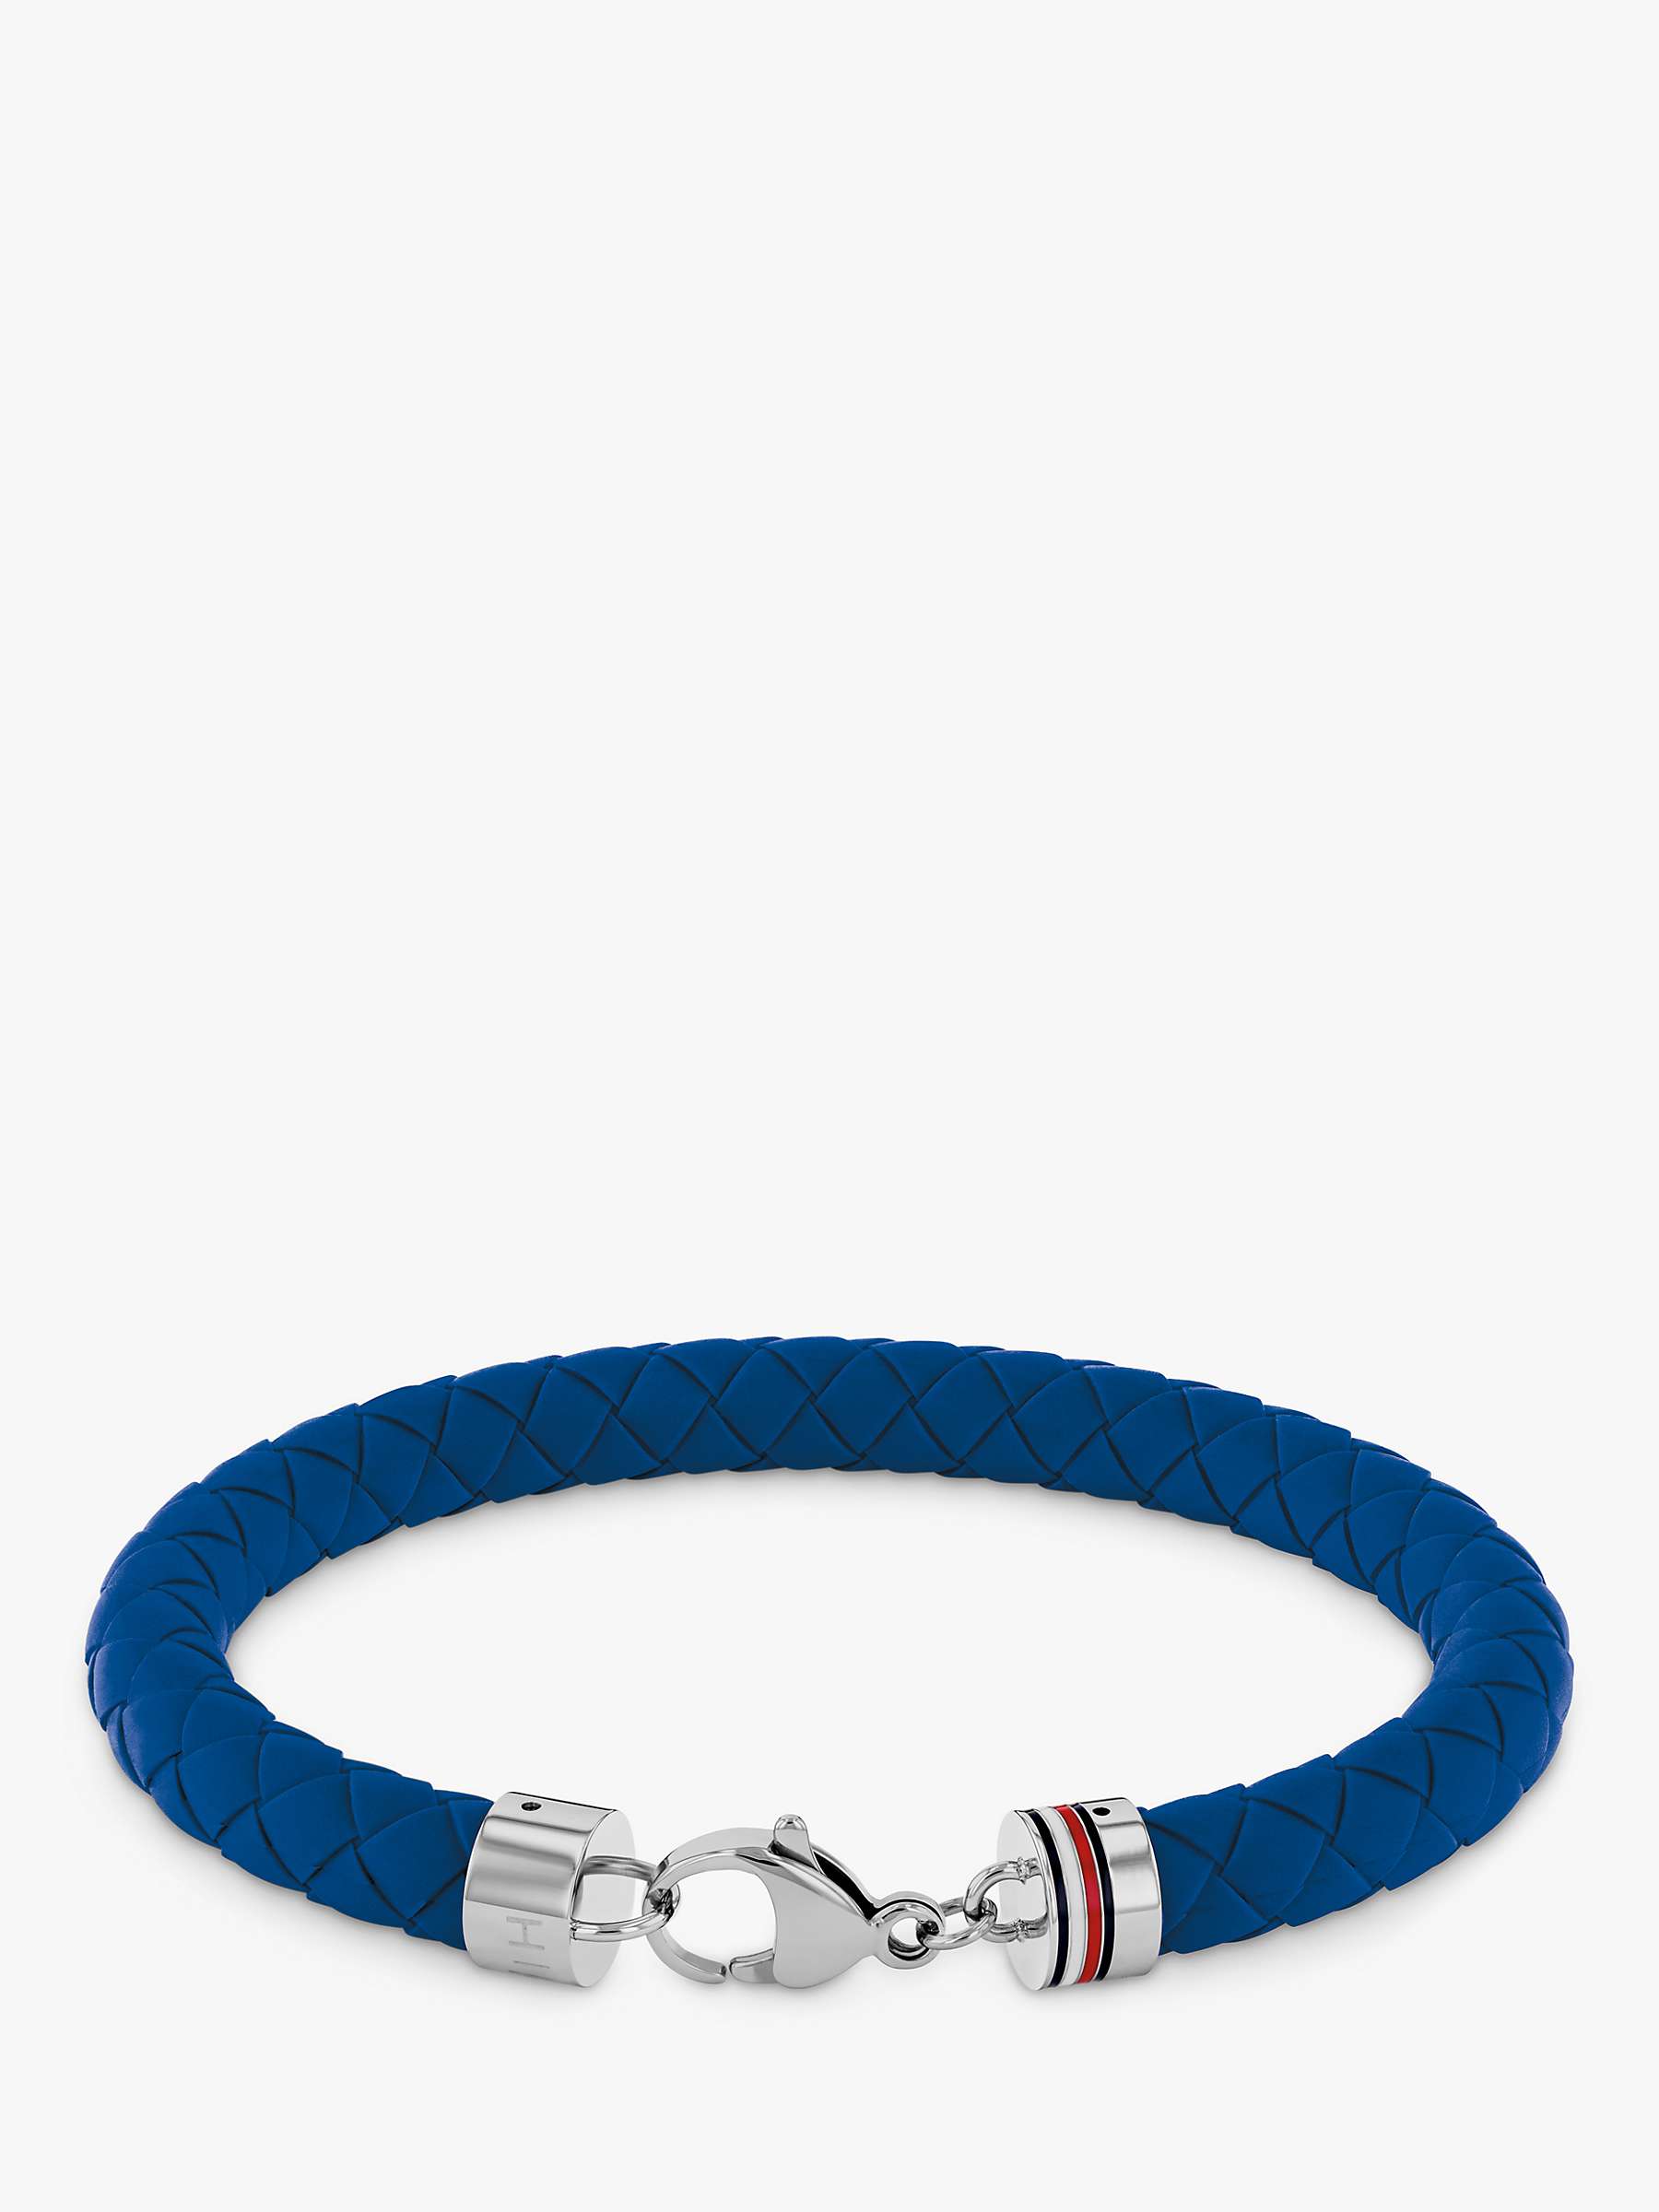 Buy Tommy Hilfiger Men's Braided Silicone Bracelet Online at johnlewis.com